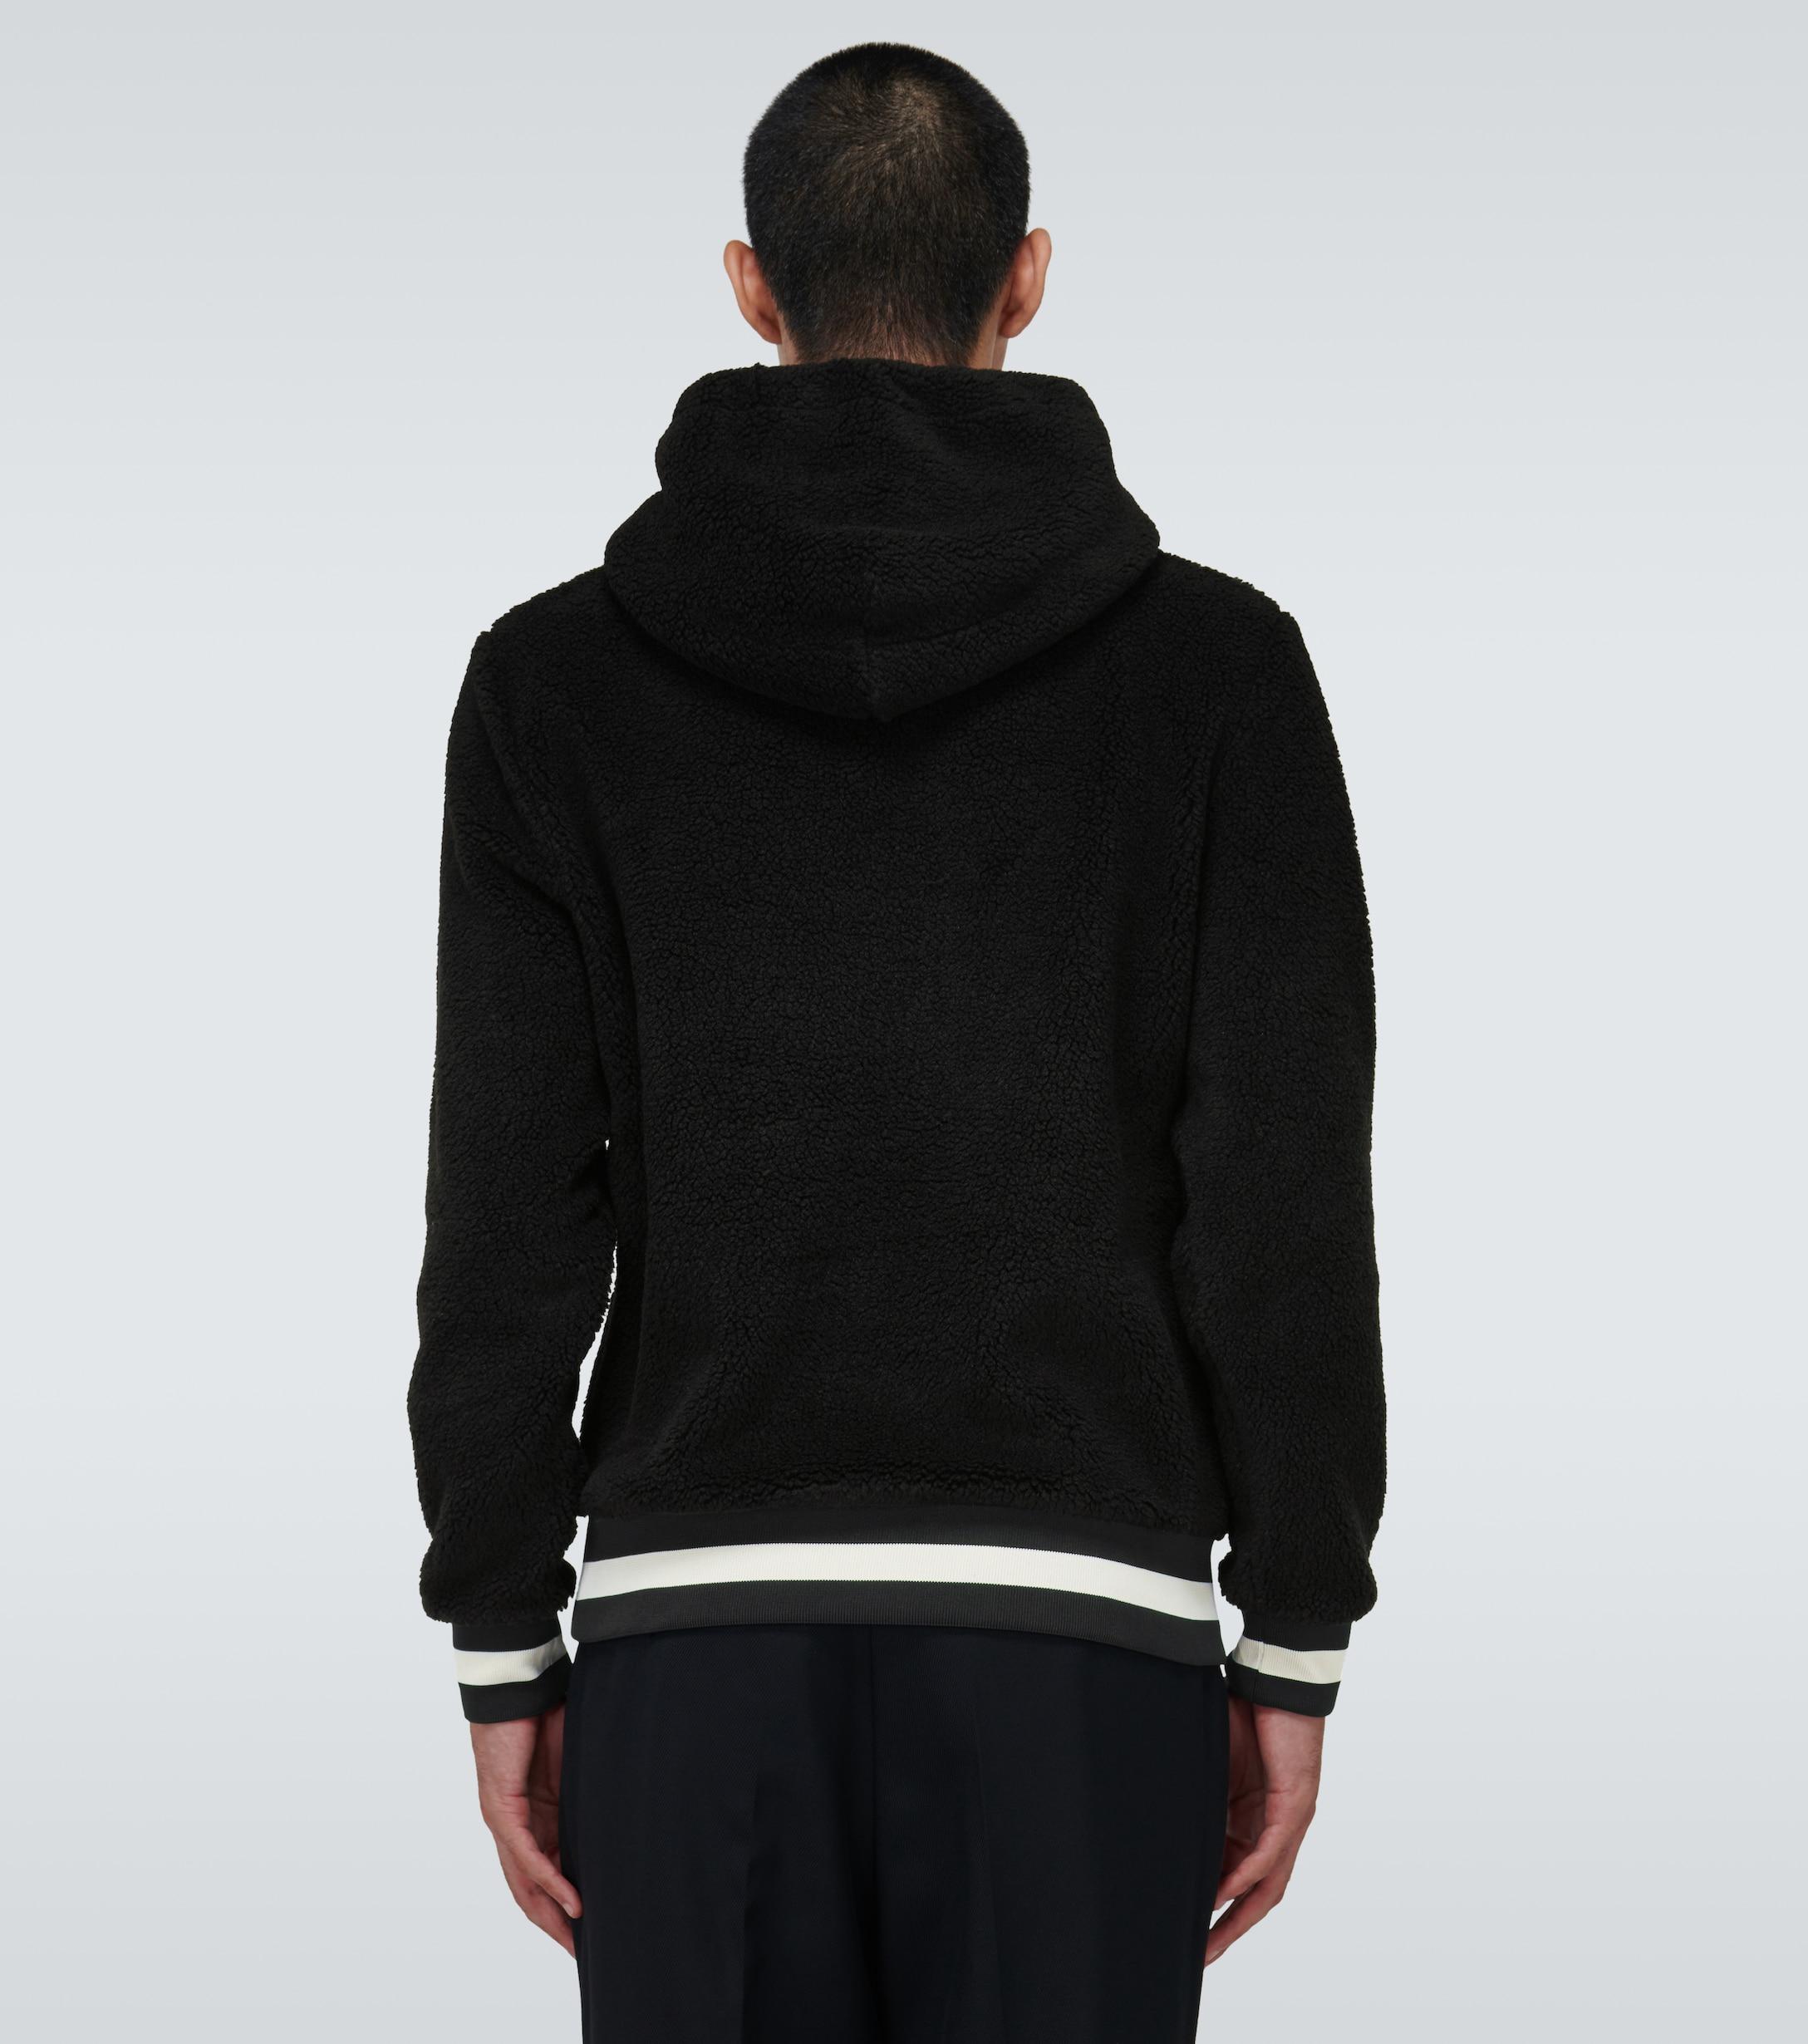 Moncler Teddy Hooded Sweatshirt in Black for Men - Lyst